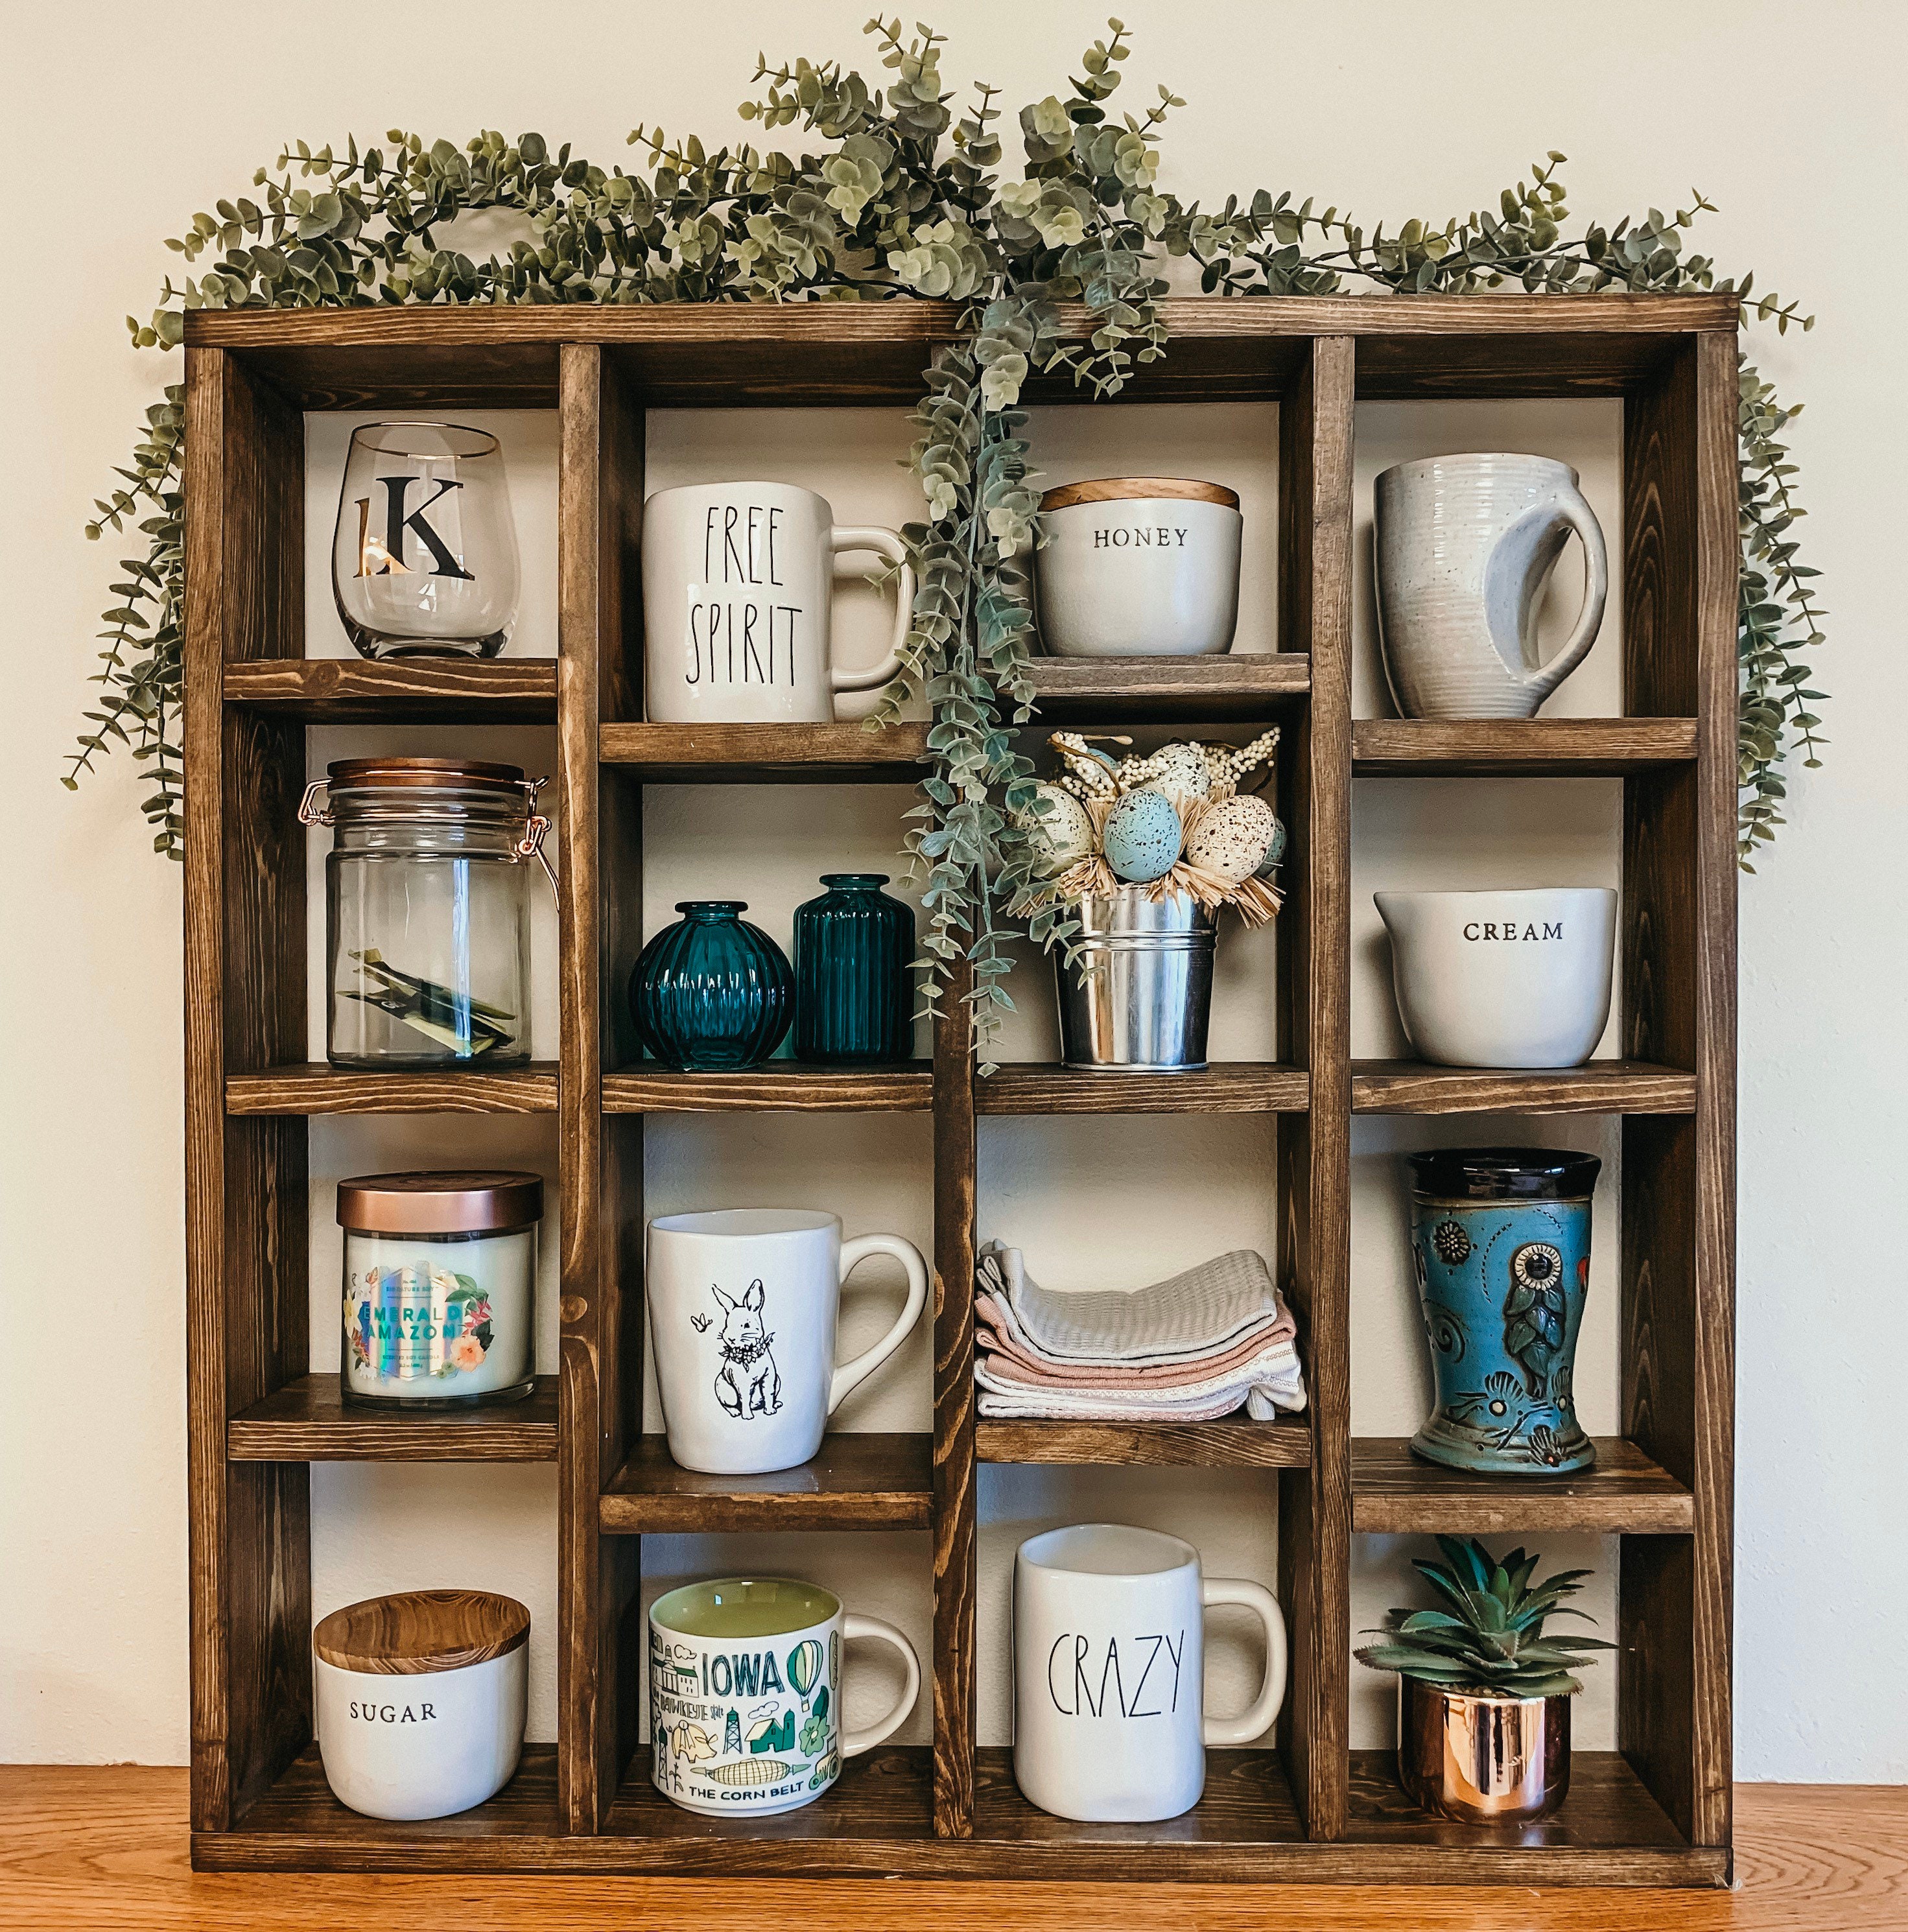 Coffee mug shelves, Tea cup shelf, Mug cubby,Wall mounted shelves